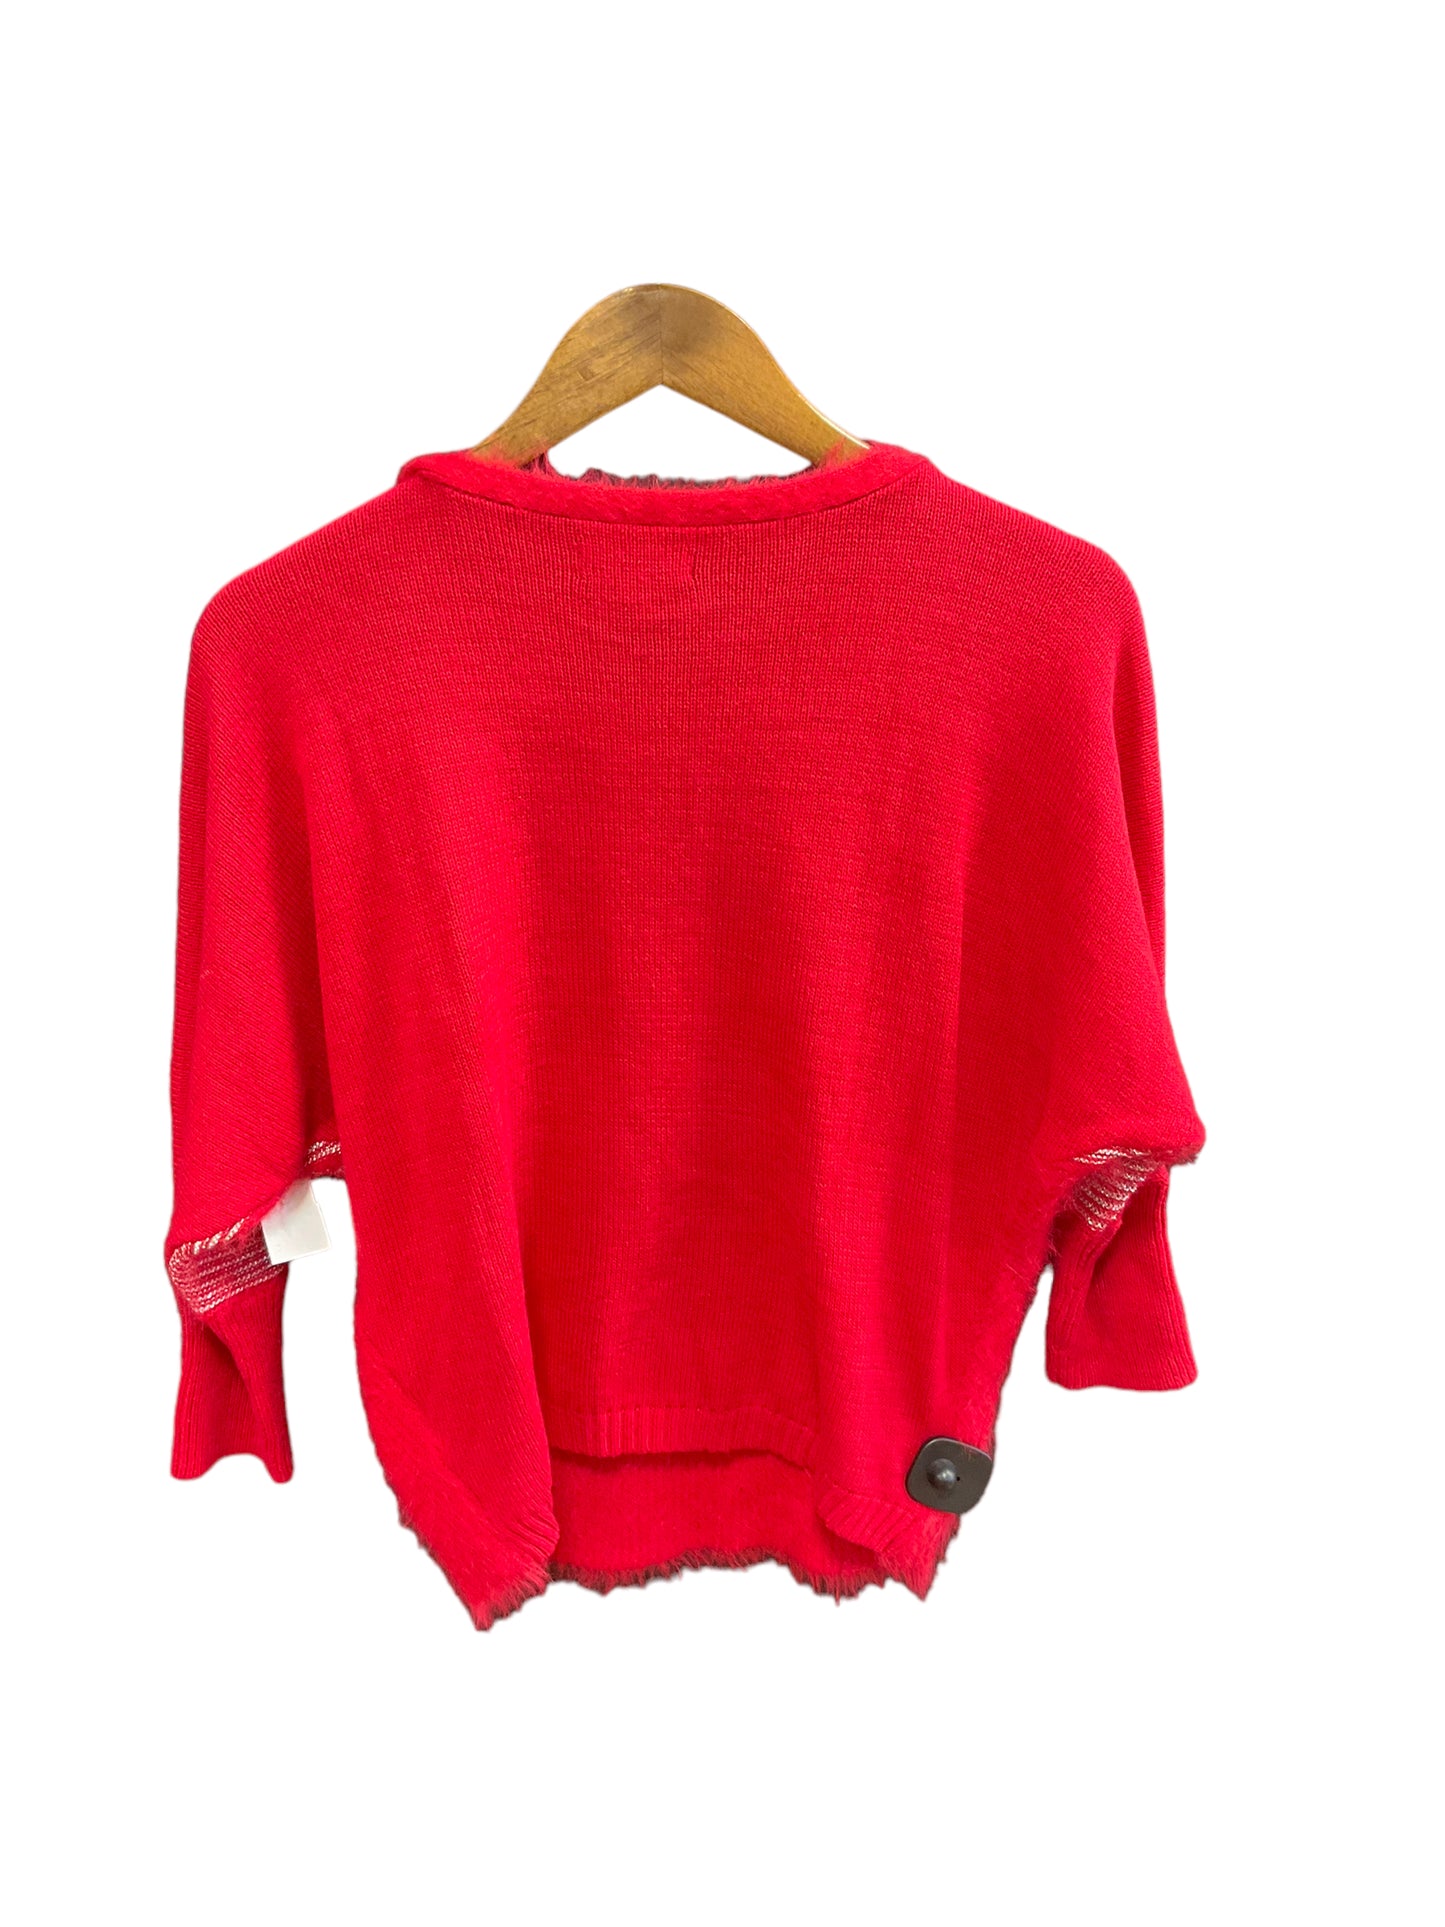 Sweater By Jennifer Lopez  Size: M